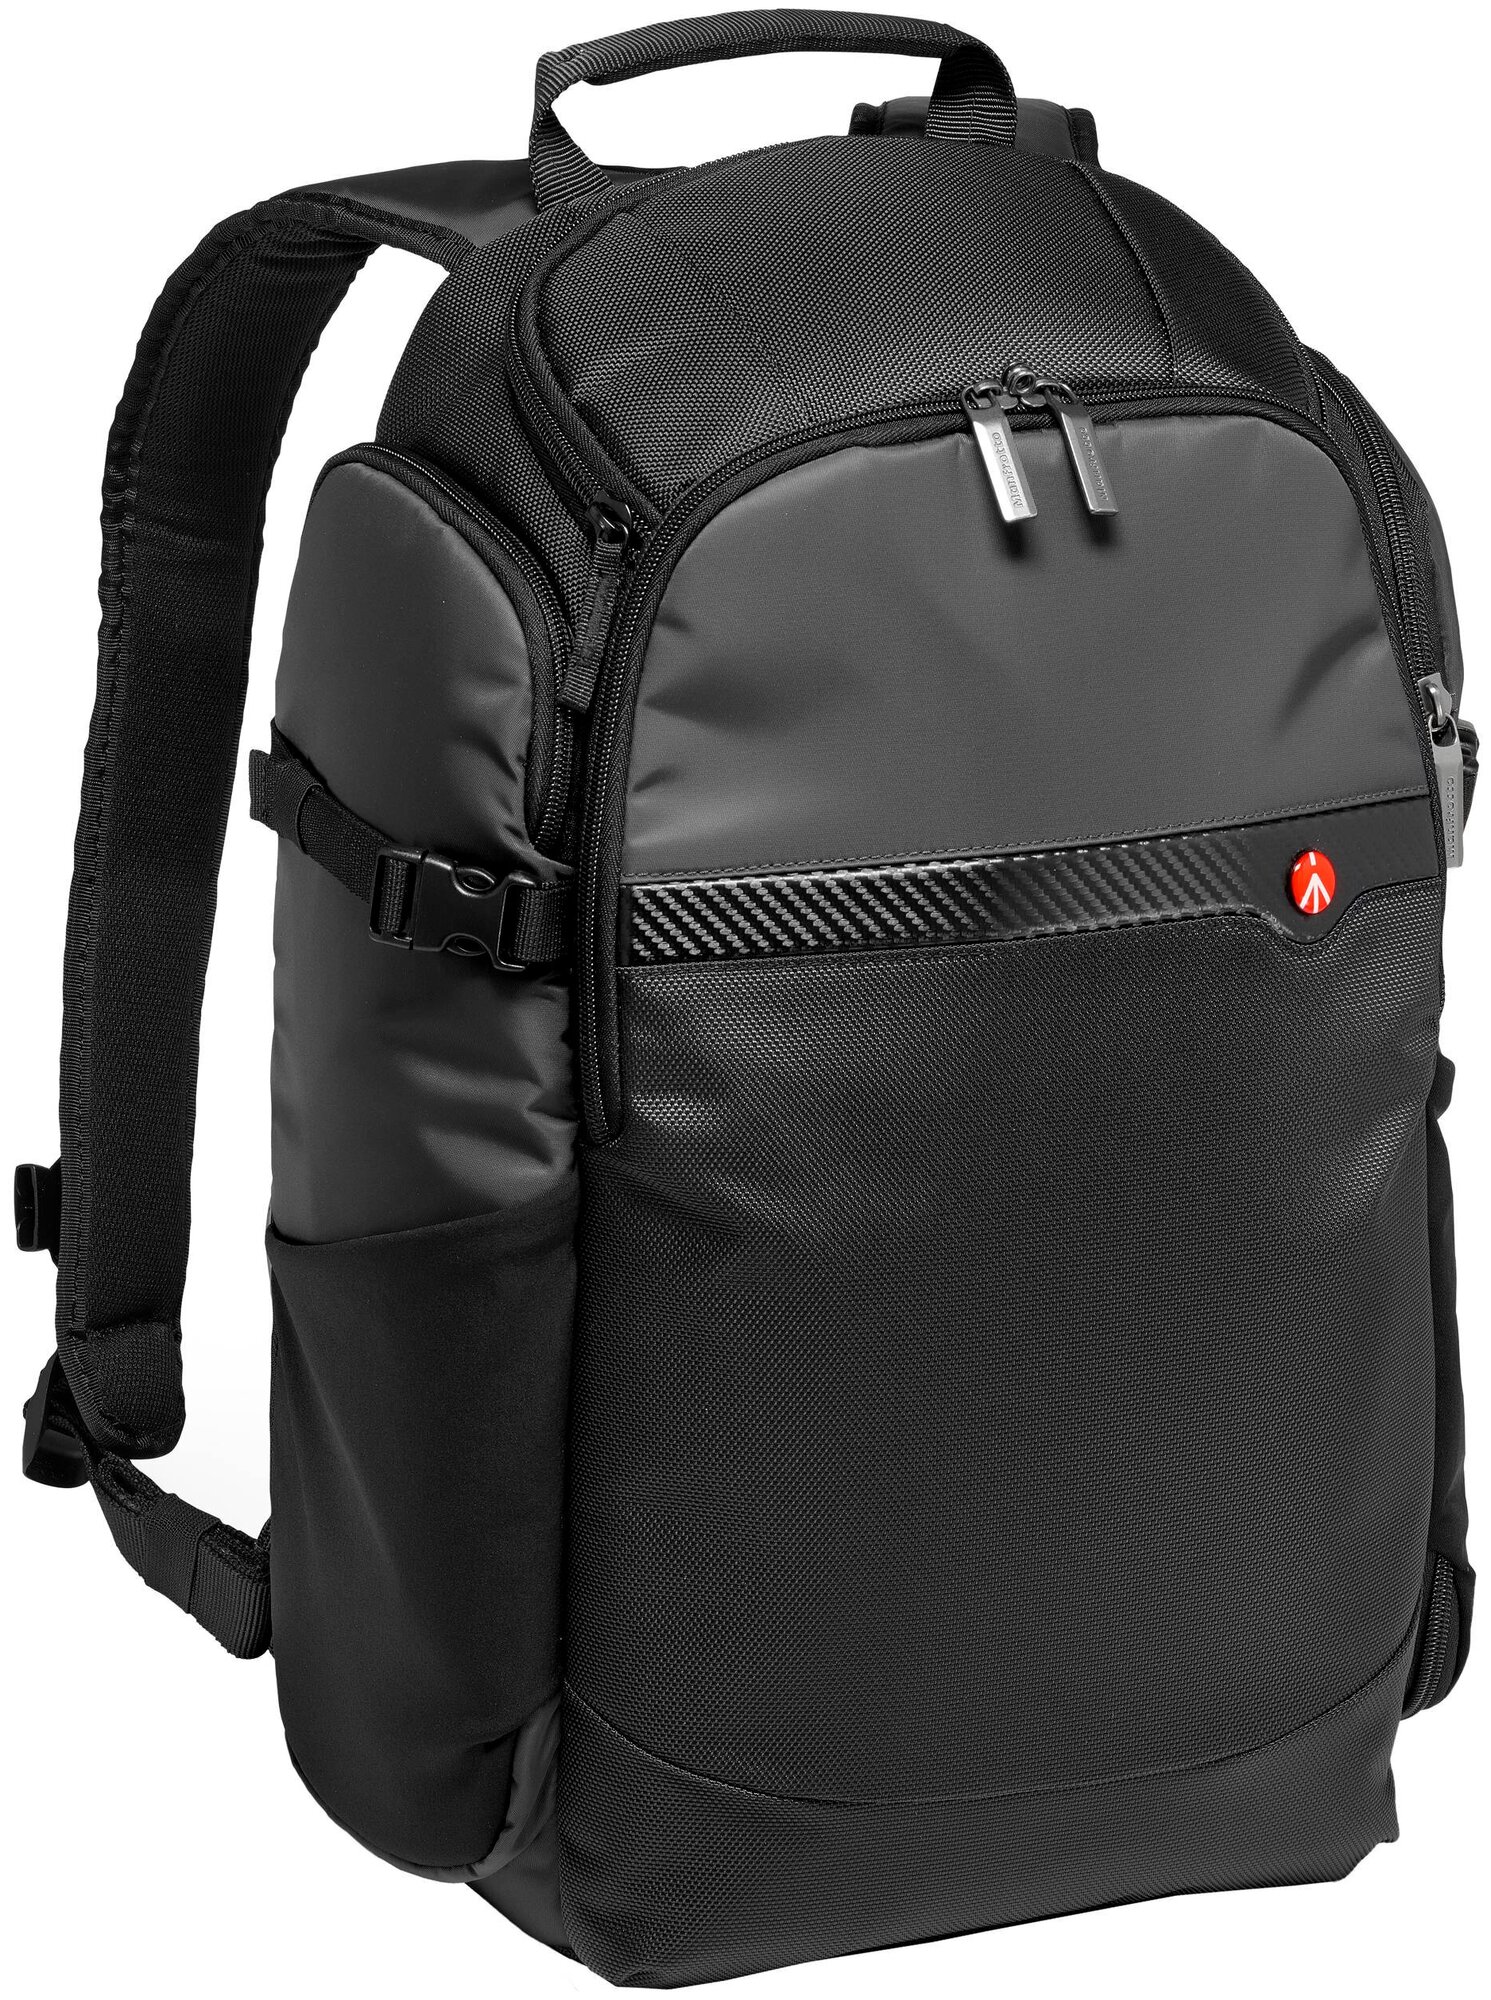 Рюкзак для фотокамеры Manfrotto Advanced Befree Camera Backpack for DSL/CSC/Drone серый